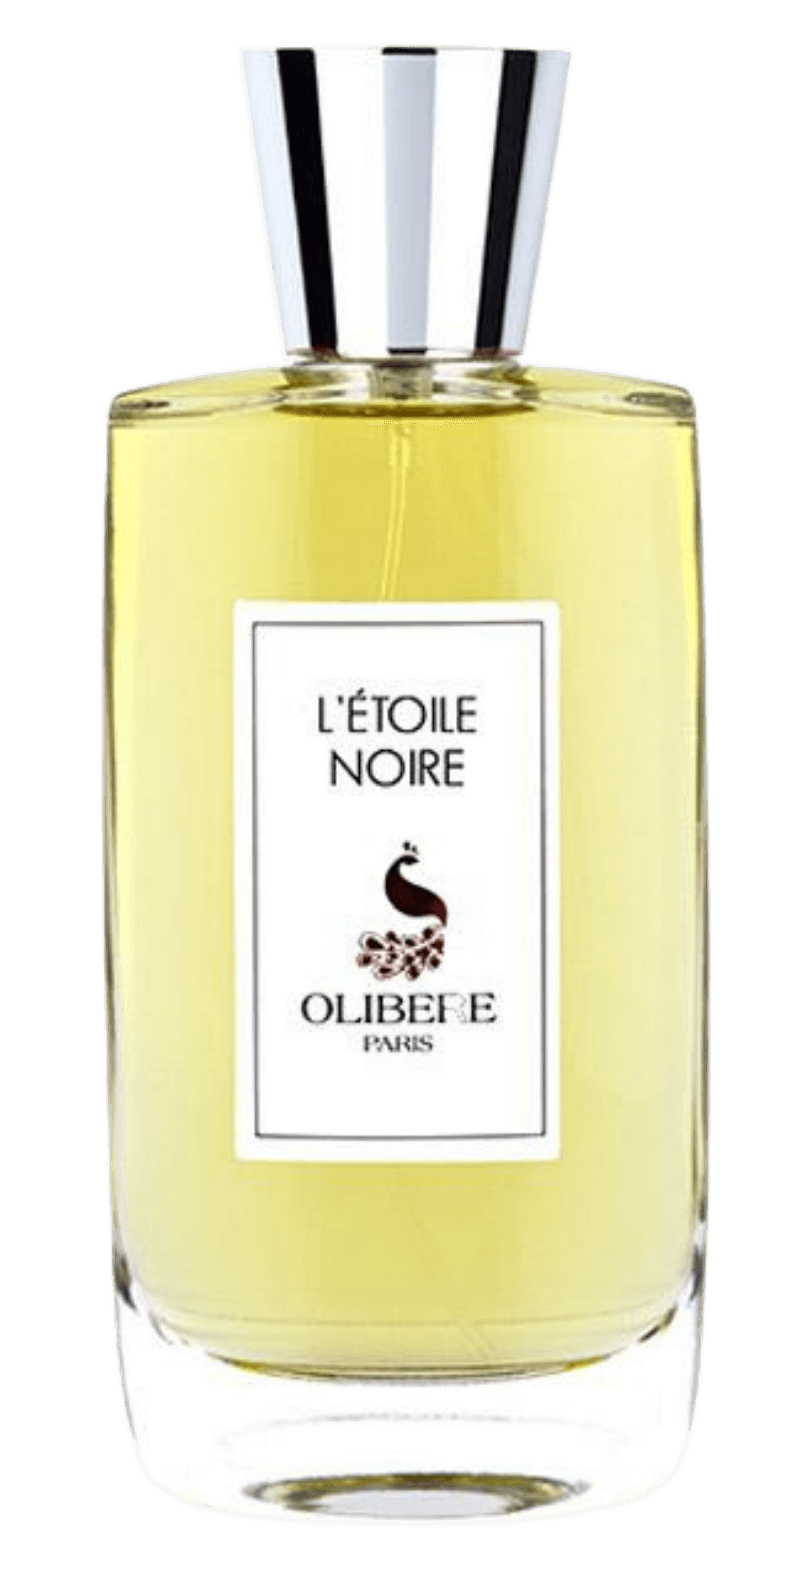 's Olibere L'etoile Noire - Bellini's Skin and Parfumerie 